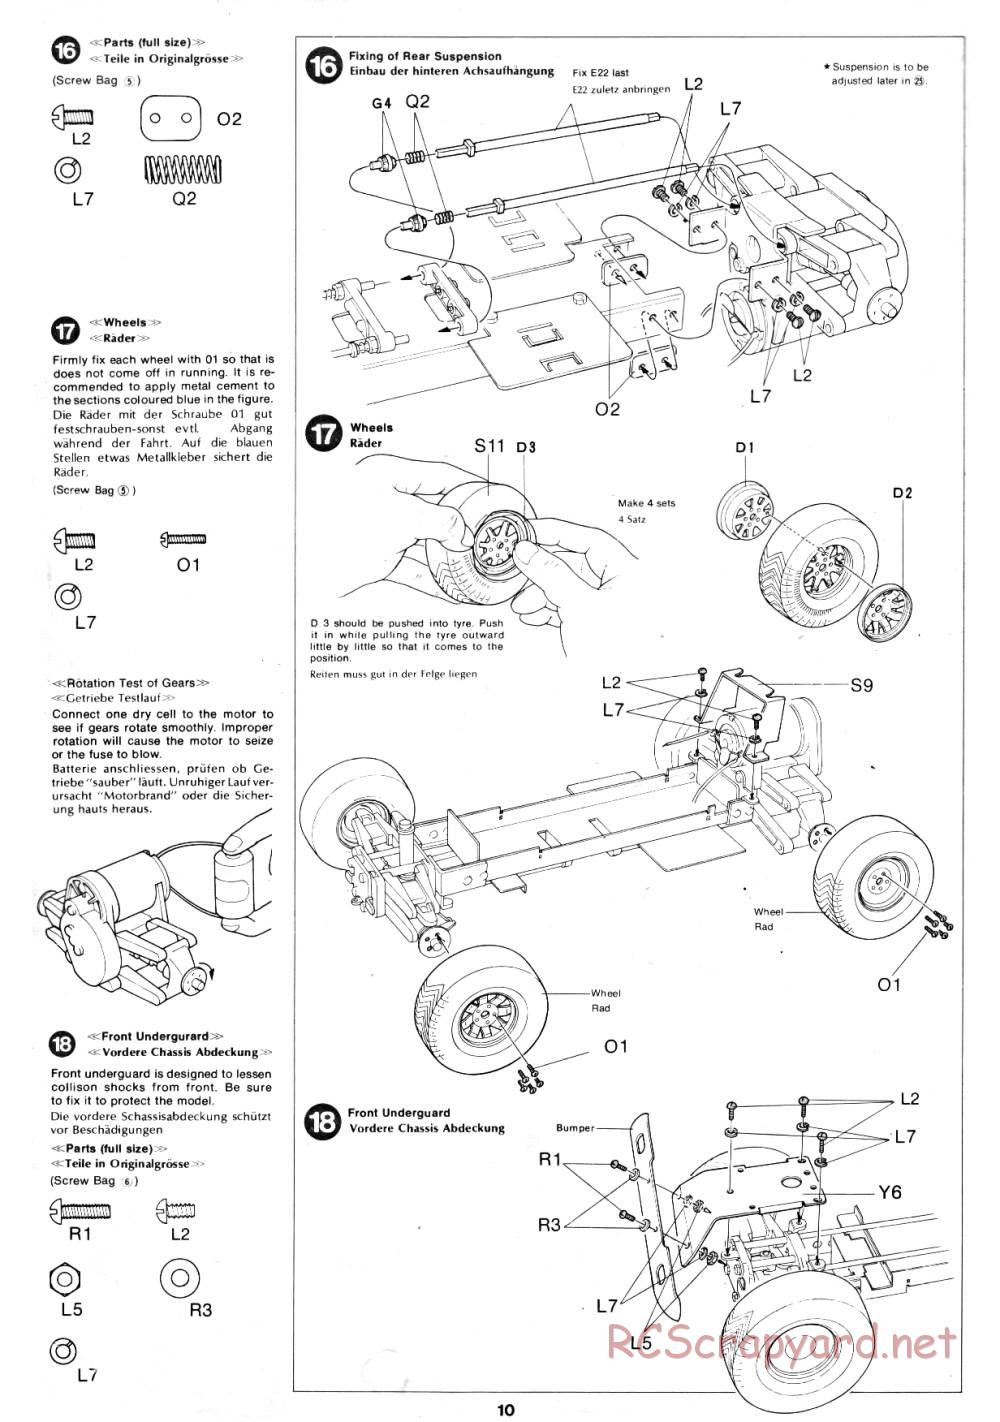 Tamiya - Lamborghini Cheetah - 58007 - Manual - Page 10